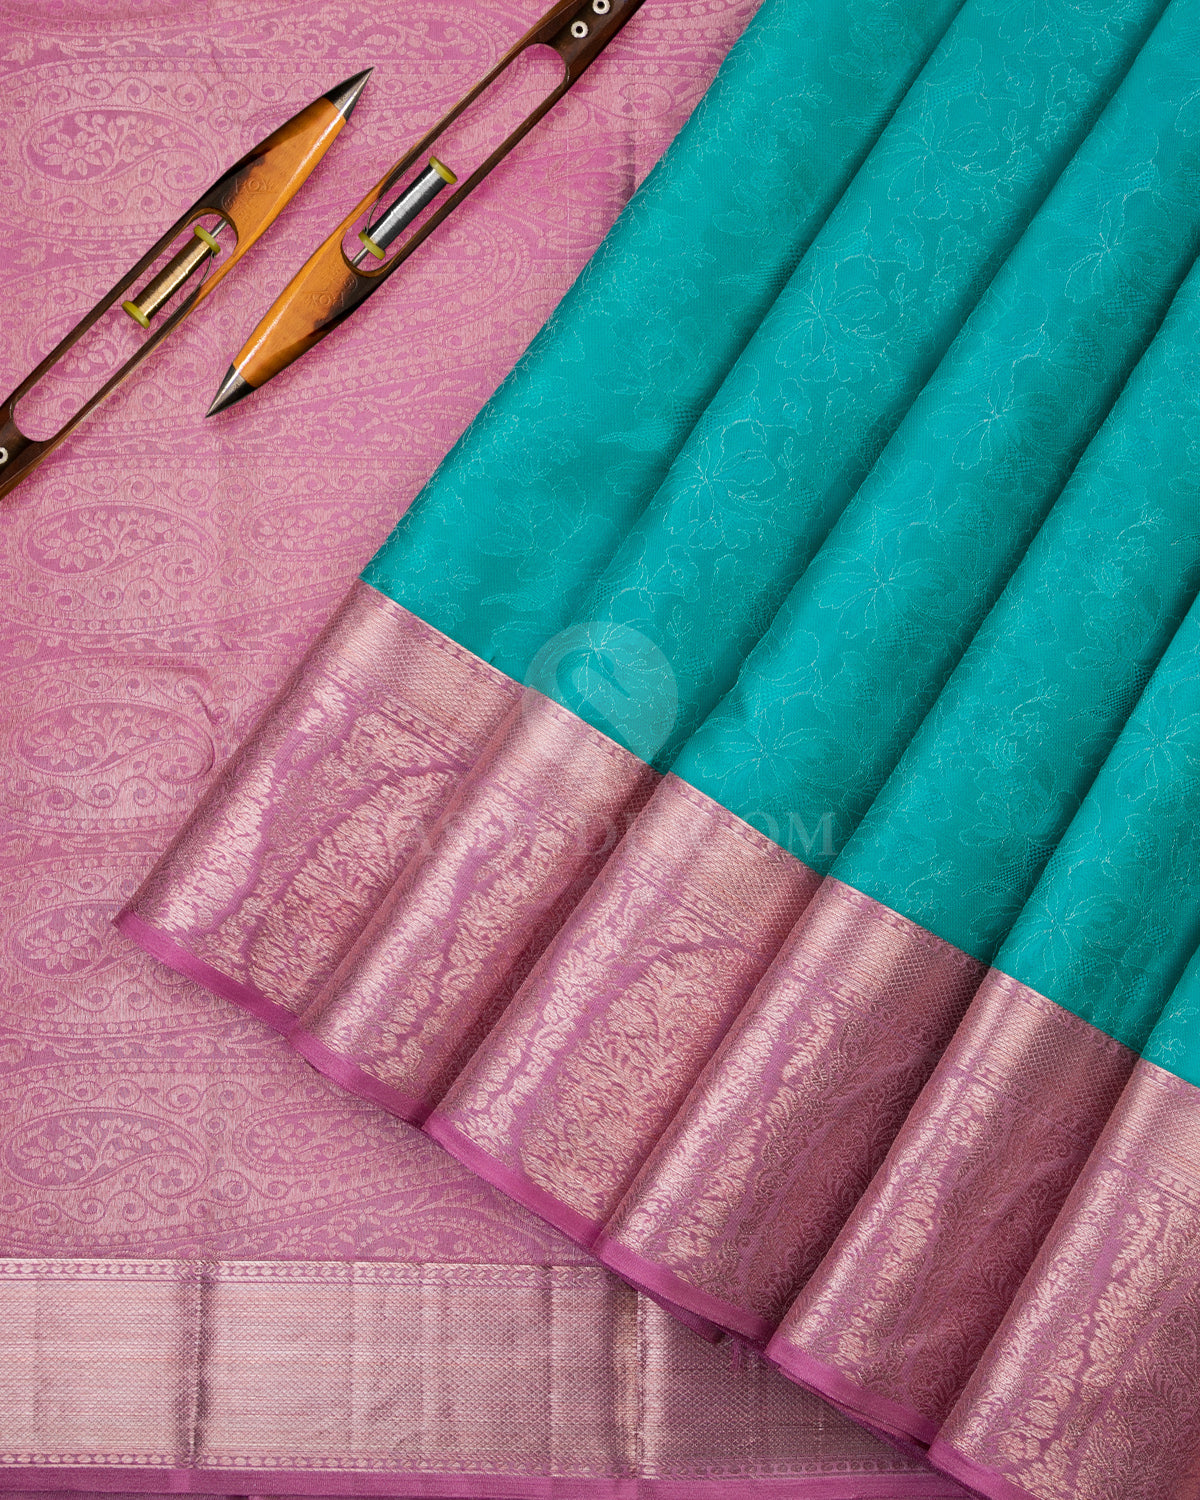 Turquoise and Pink Kanjivaram Silk Saree - DT194 - View 2